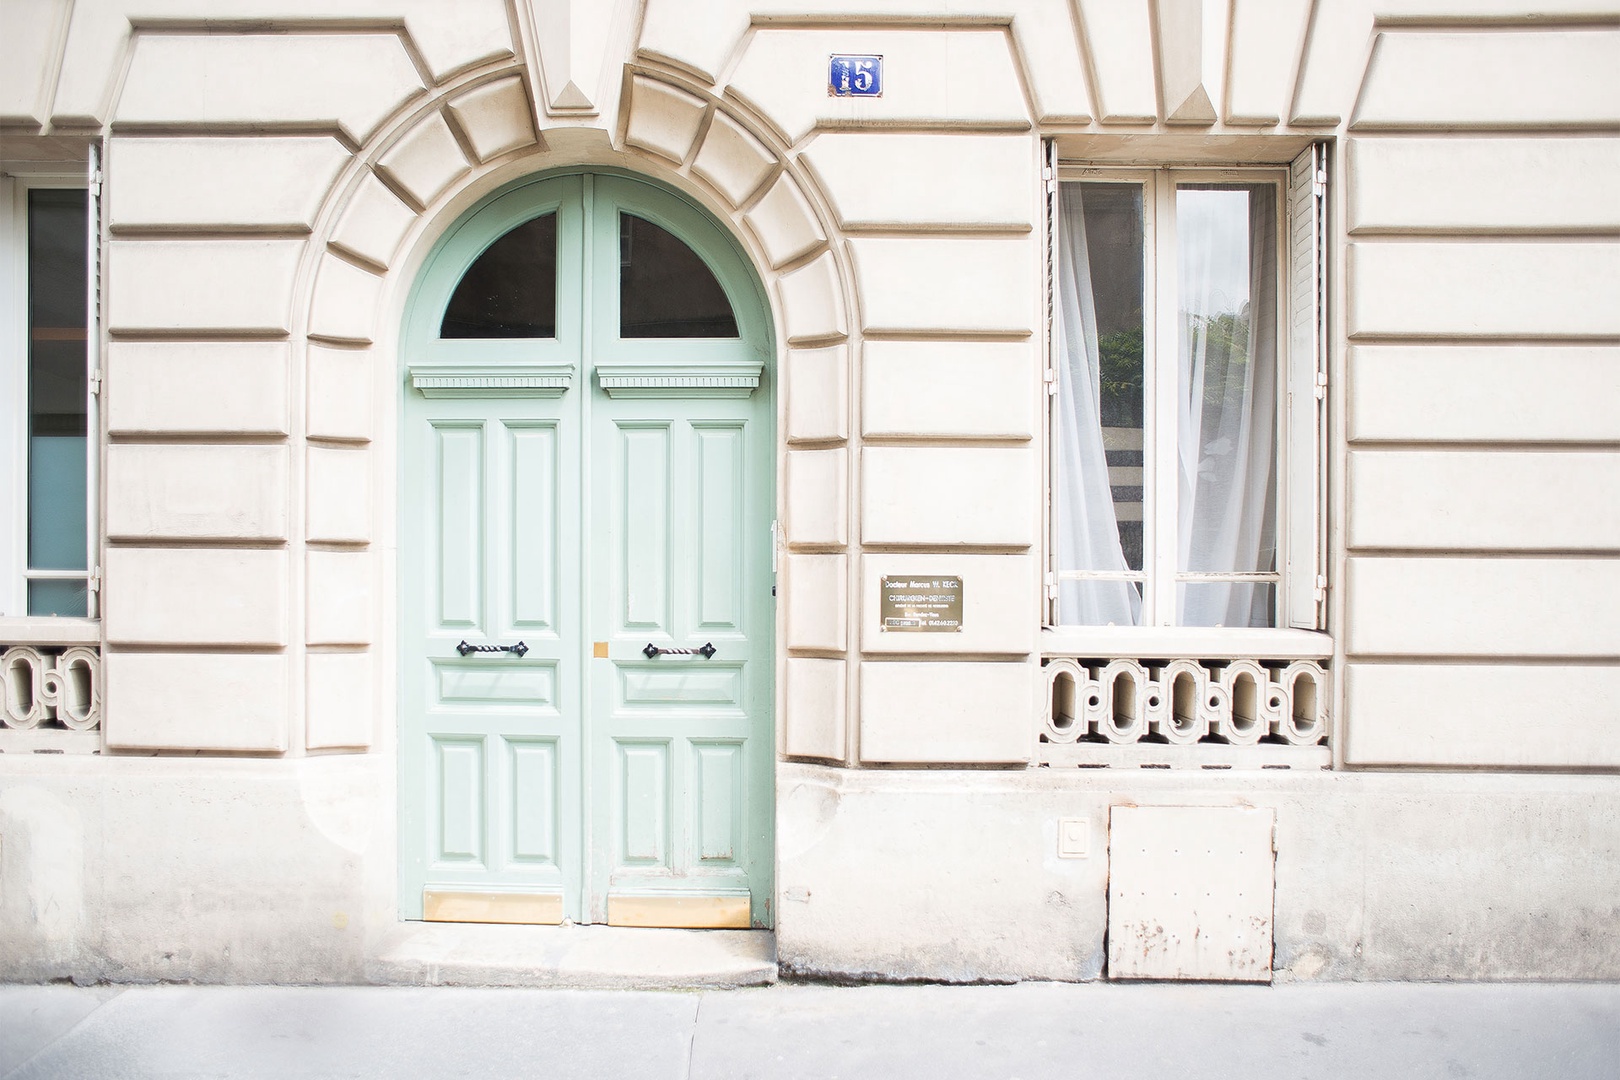 Gorgeous Parisian buildings line every street